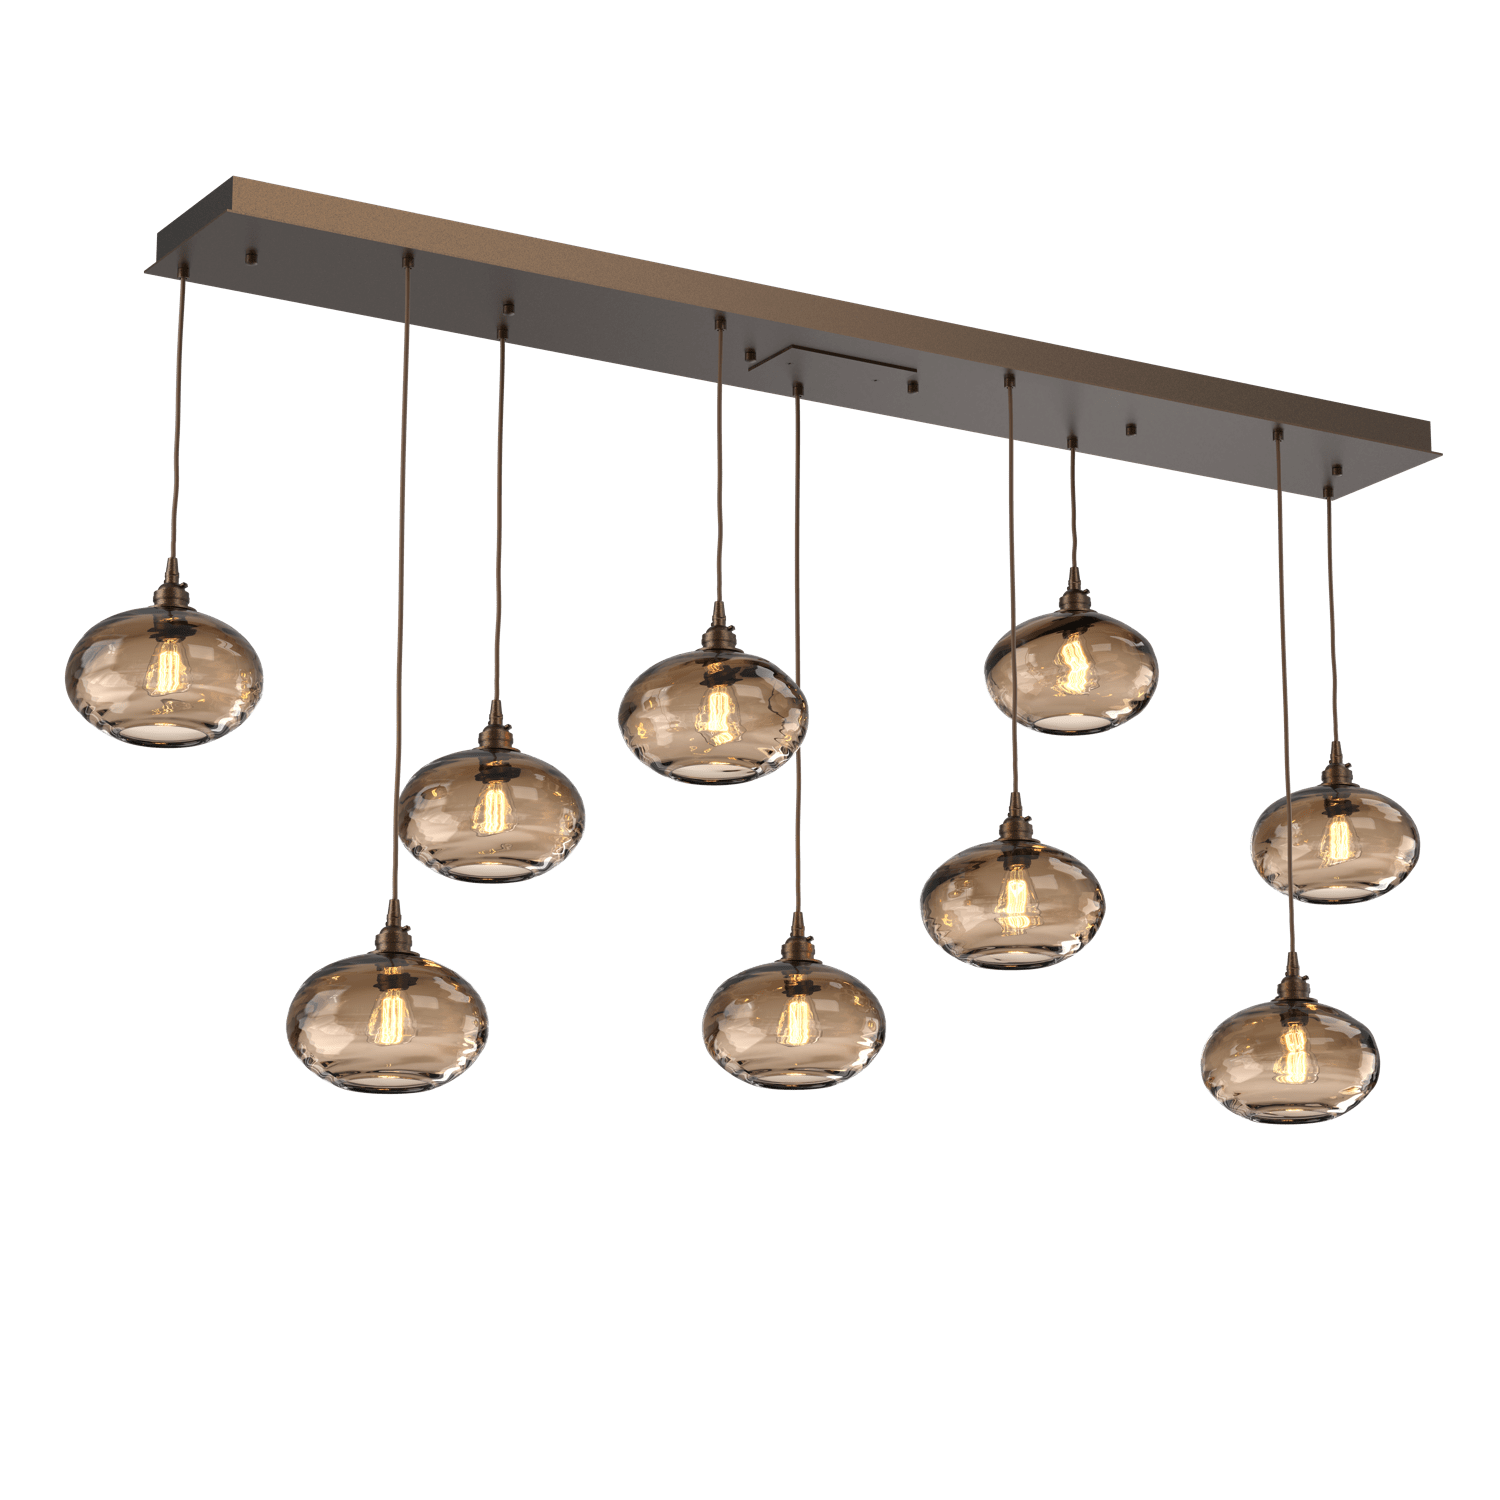 PLB0036-09-FB-OB-Hammerton-Studio-Optic-Blown-Glass-Coppa-9-light-linear-pendant-chandelier-with-flat-bronze-finish-and-optic-bronze-blown-glass-shades-and-incandescent-lamping